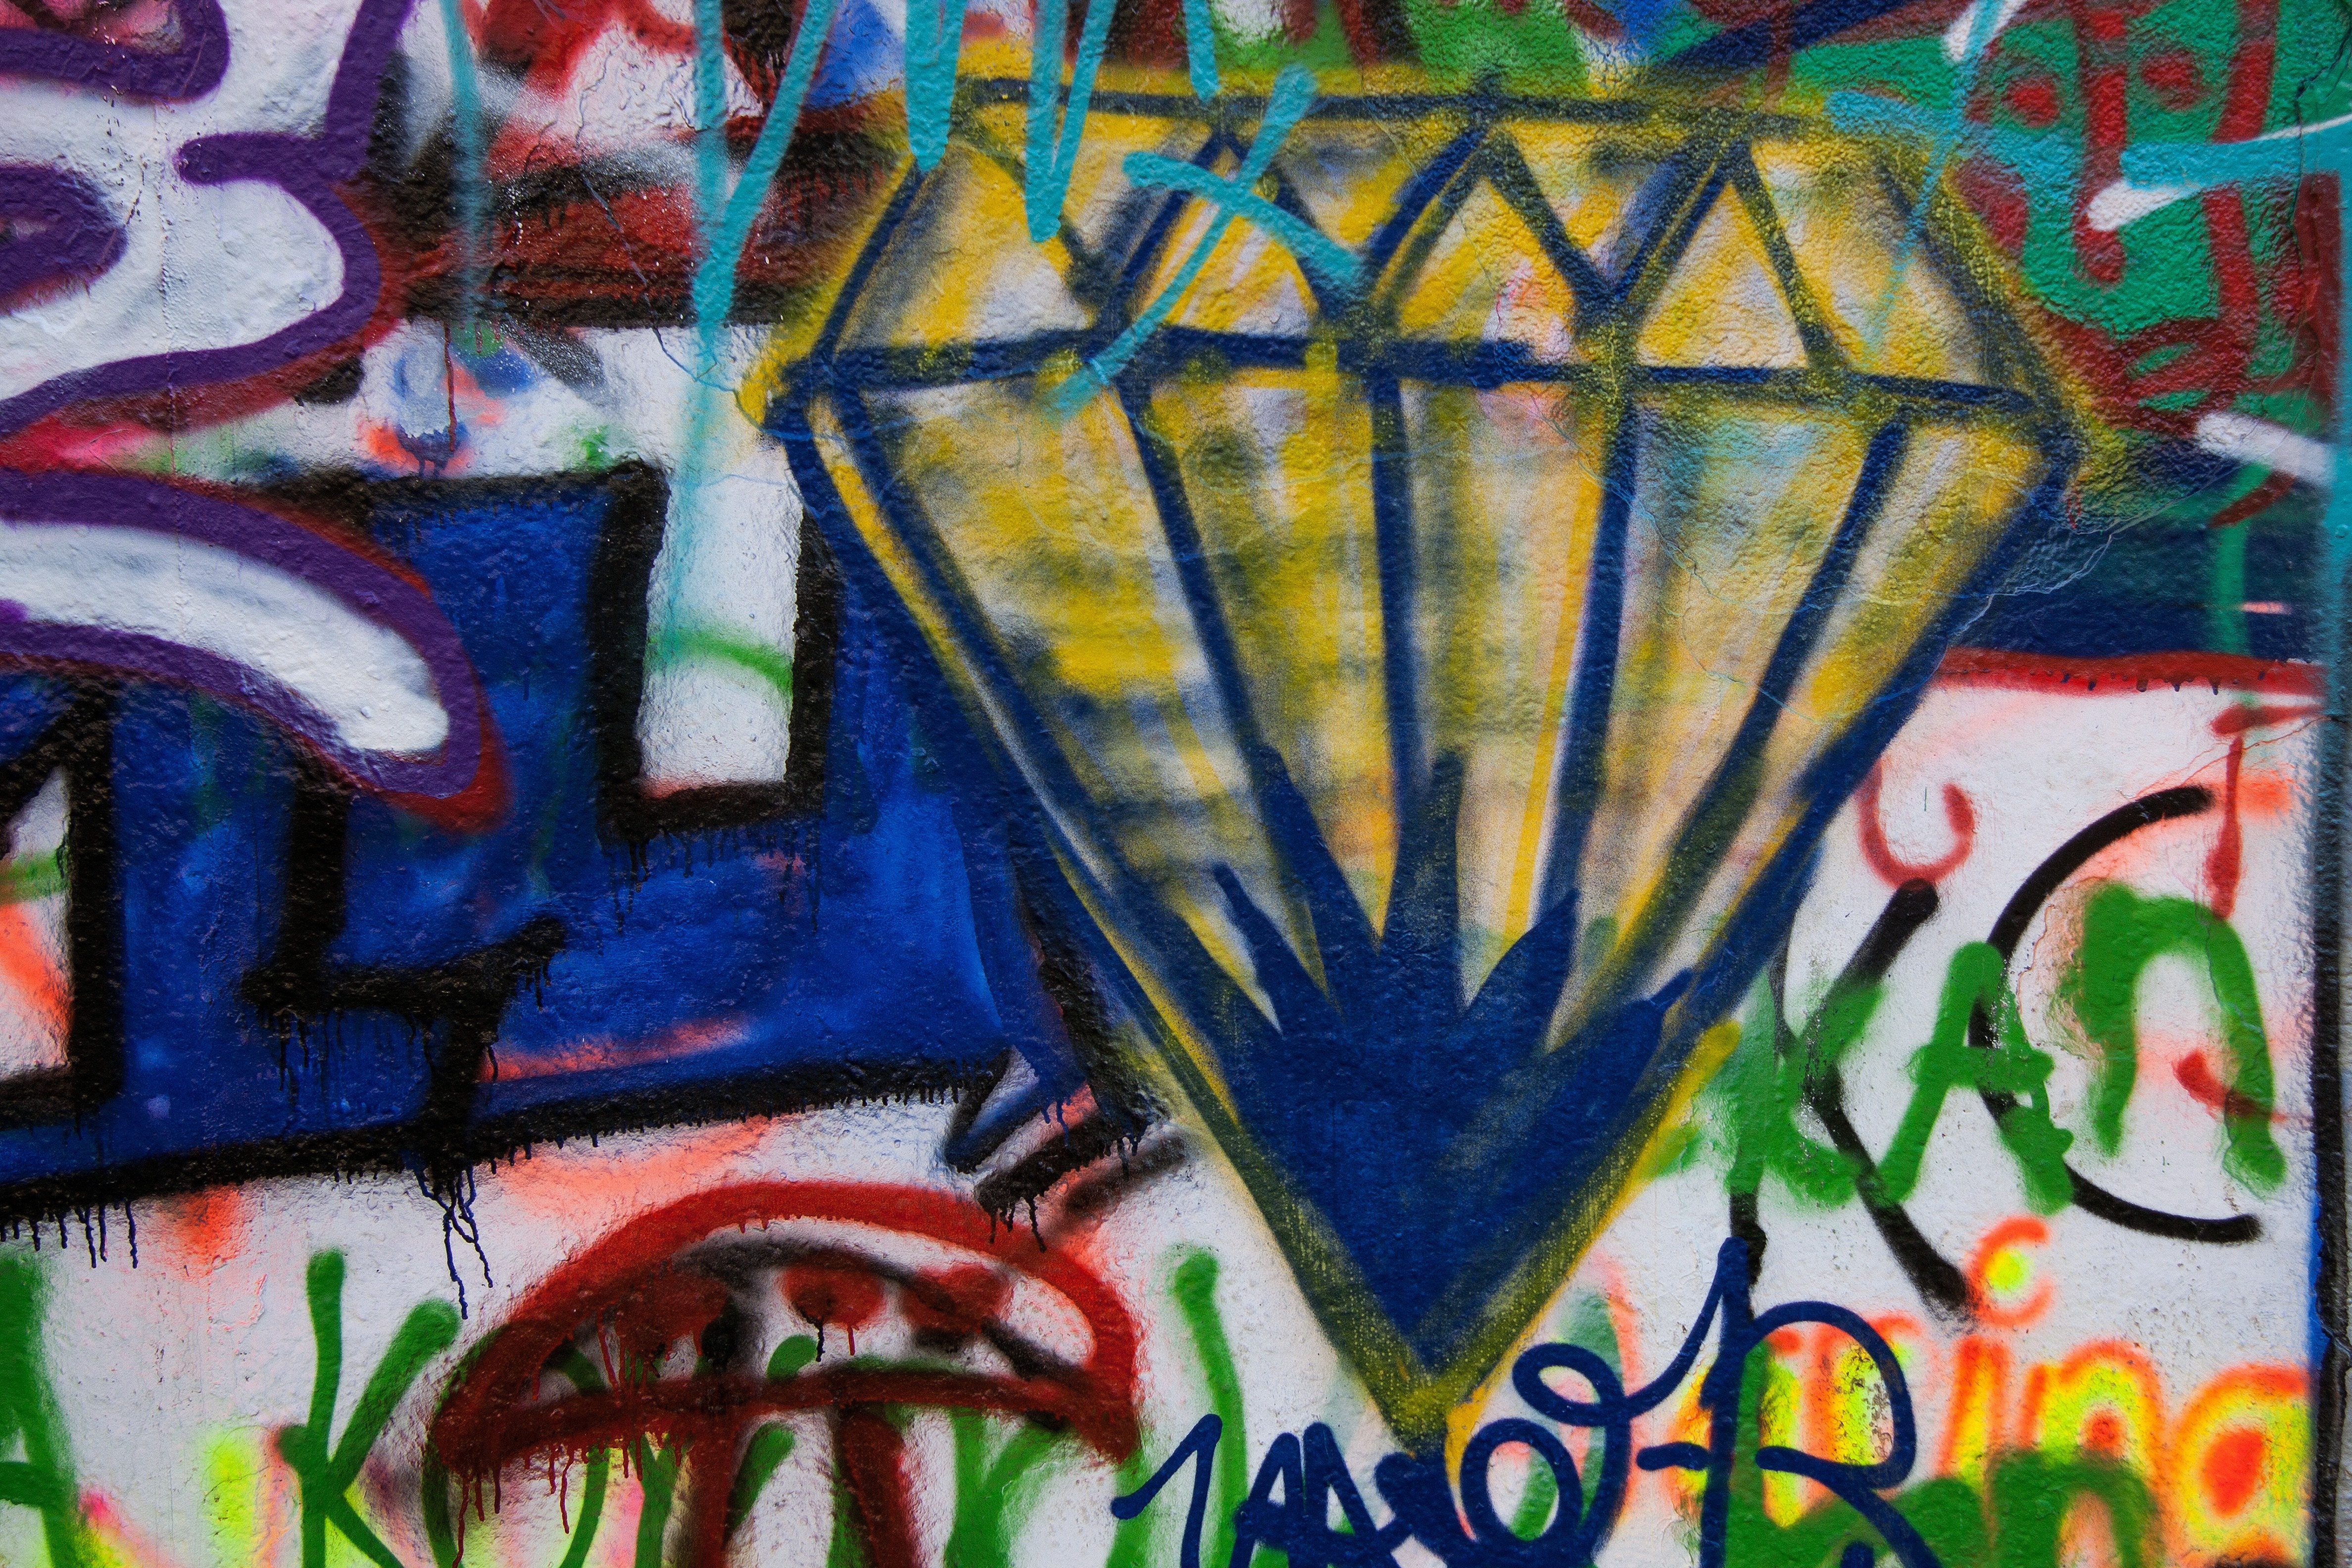 Graffiti, Grunge, Wall, Home, City, graffiti, multi colored